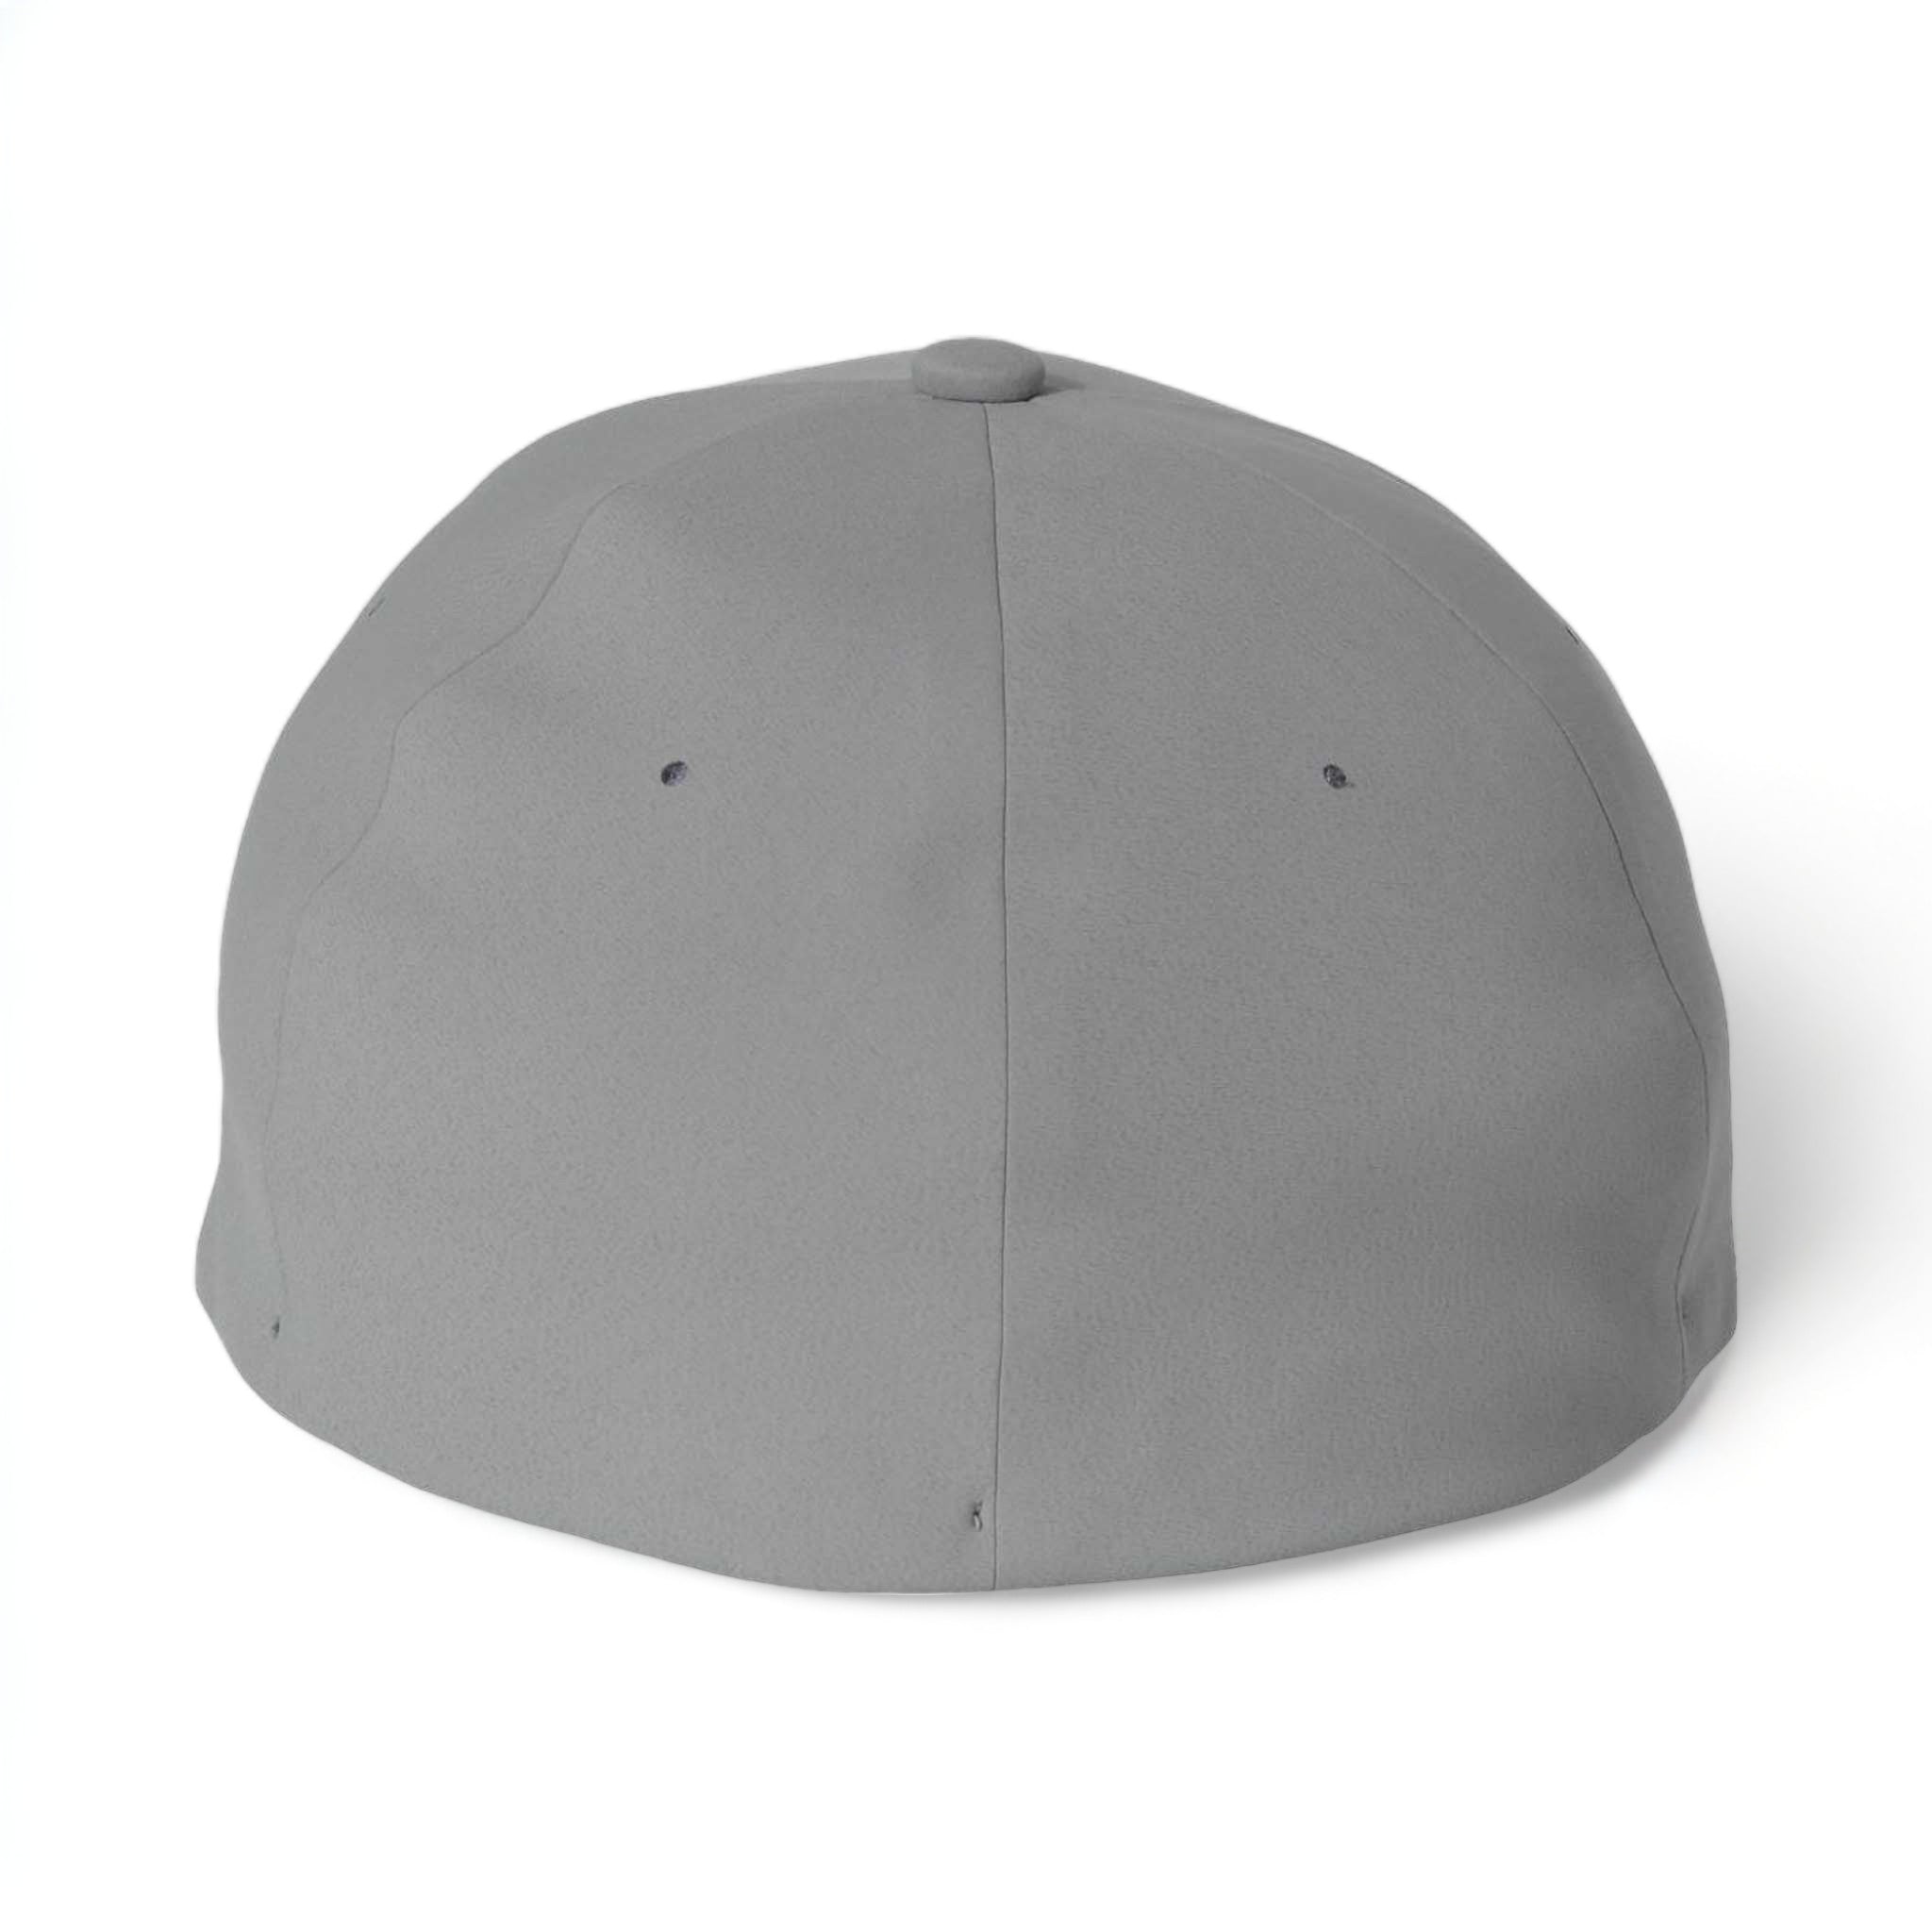 Back view of Flexfit 180 custom hat in silver